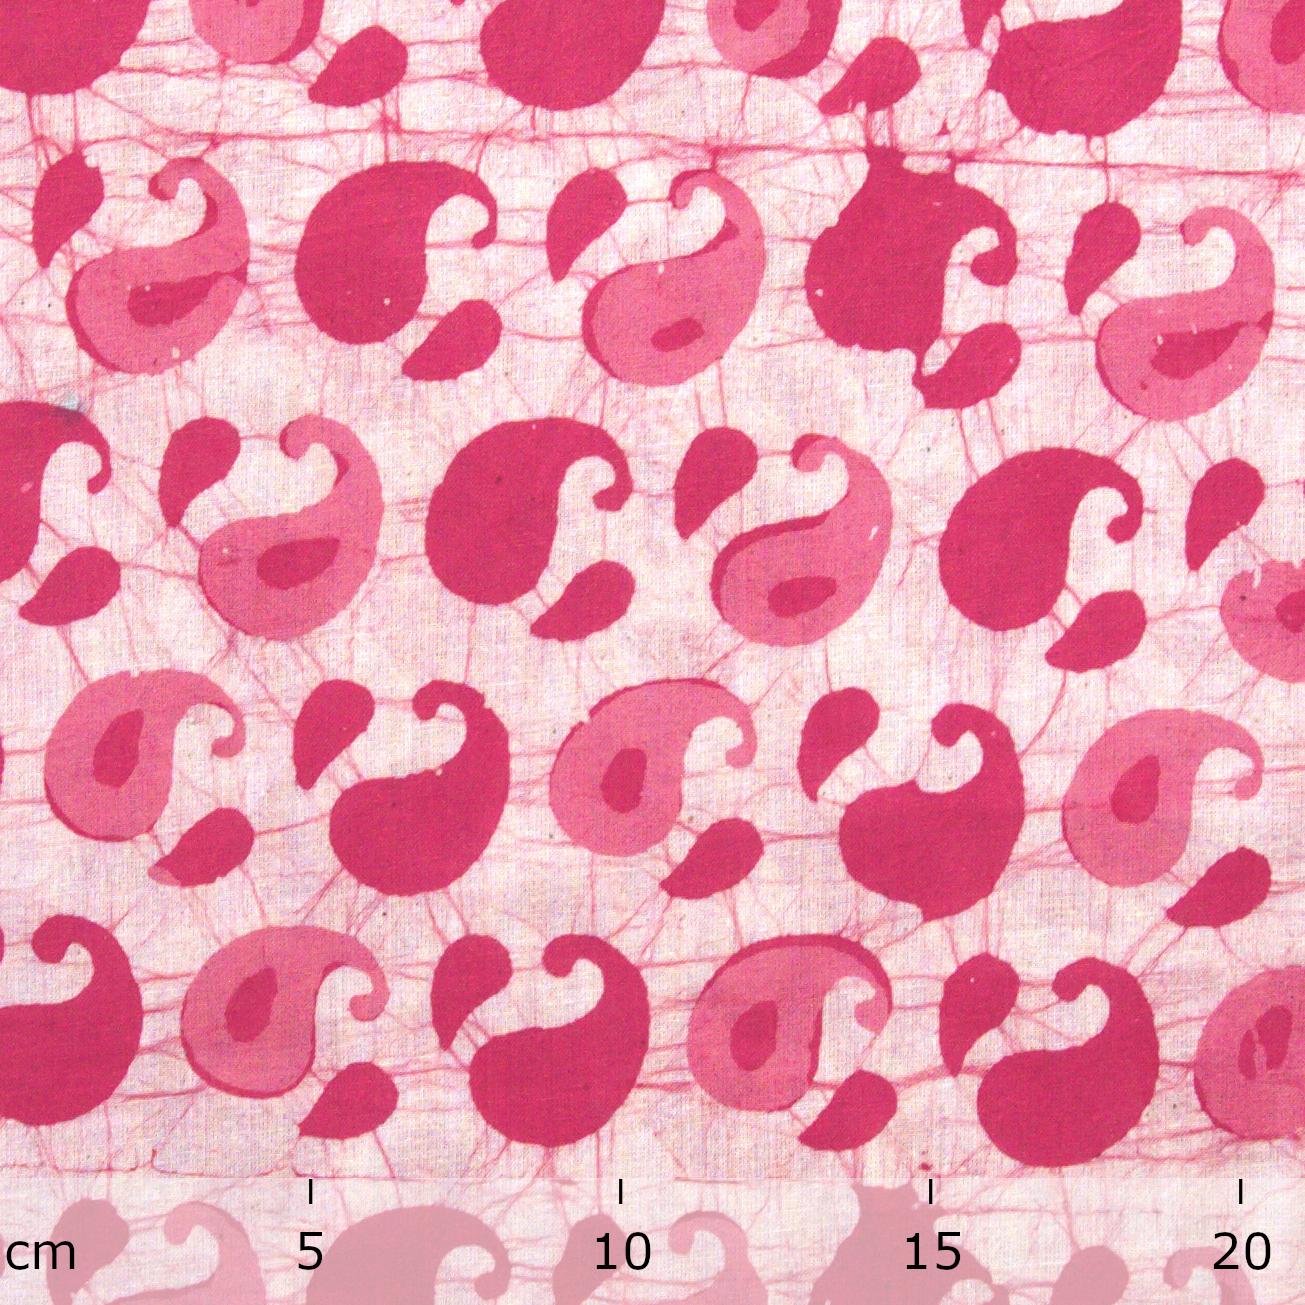 3 - SHA07 - 100% Block-Printed Batik Cotton Fabric From India - Batik - Pink Red Couple Paisley - Ruler